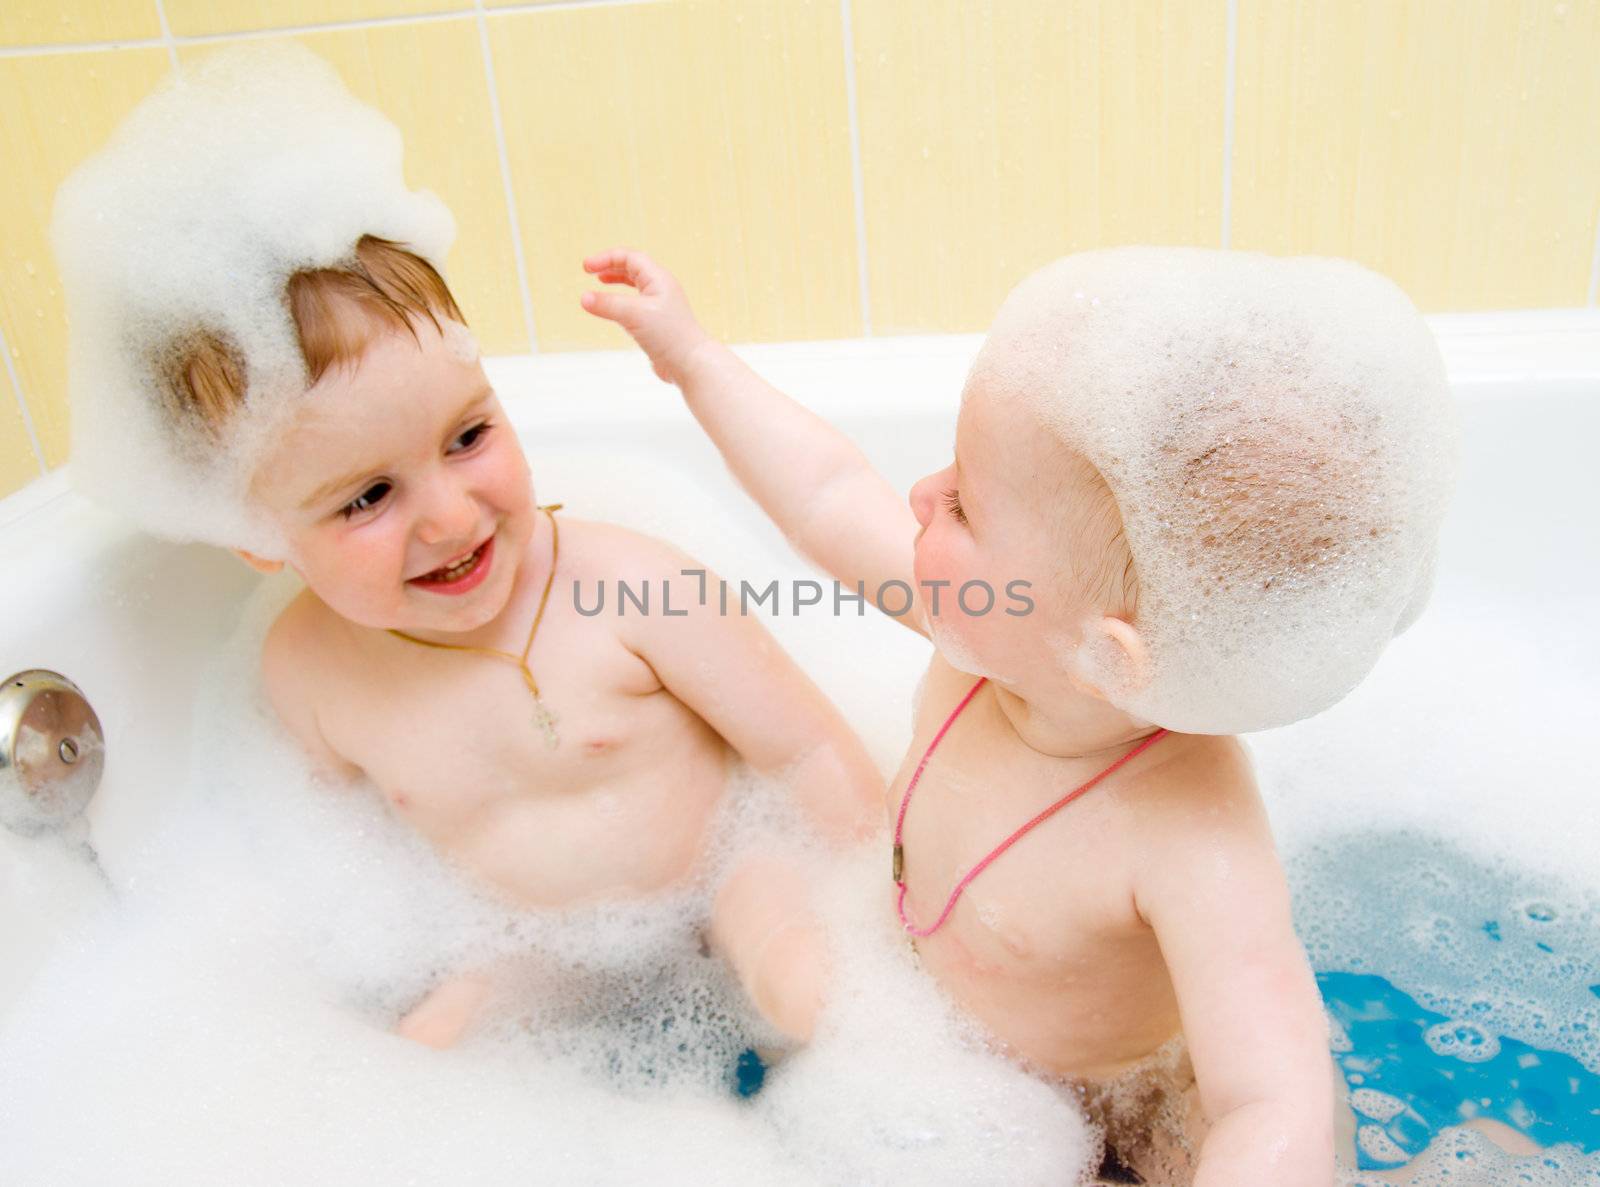  Bathing child.Health and hygiene.Small child in bath